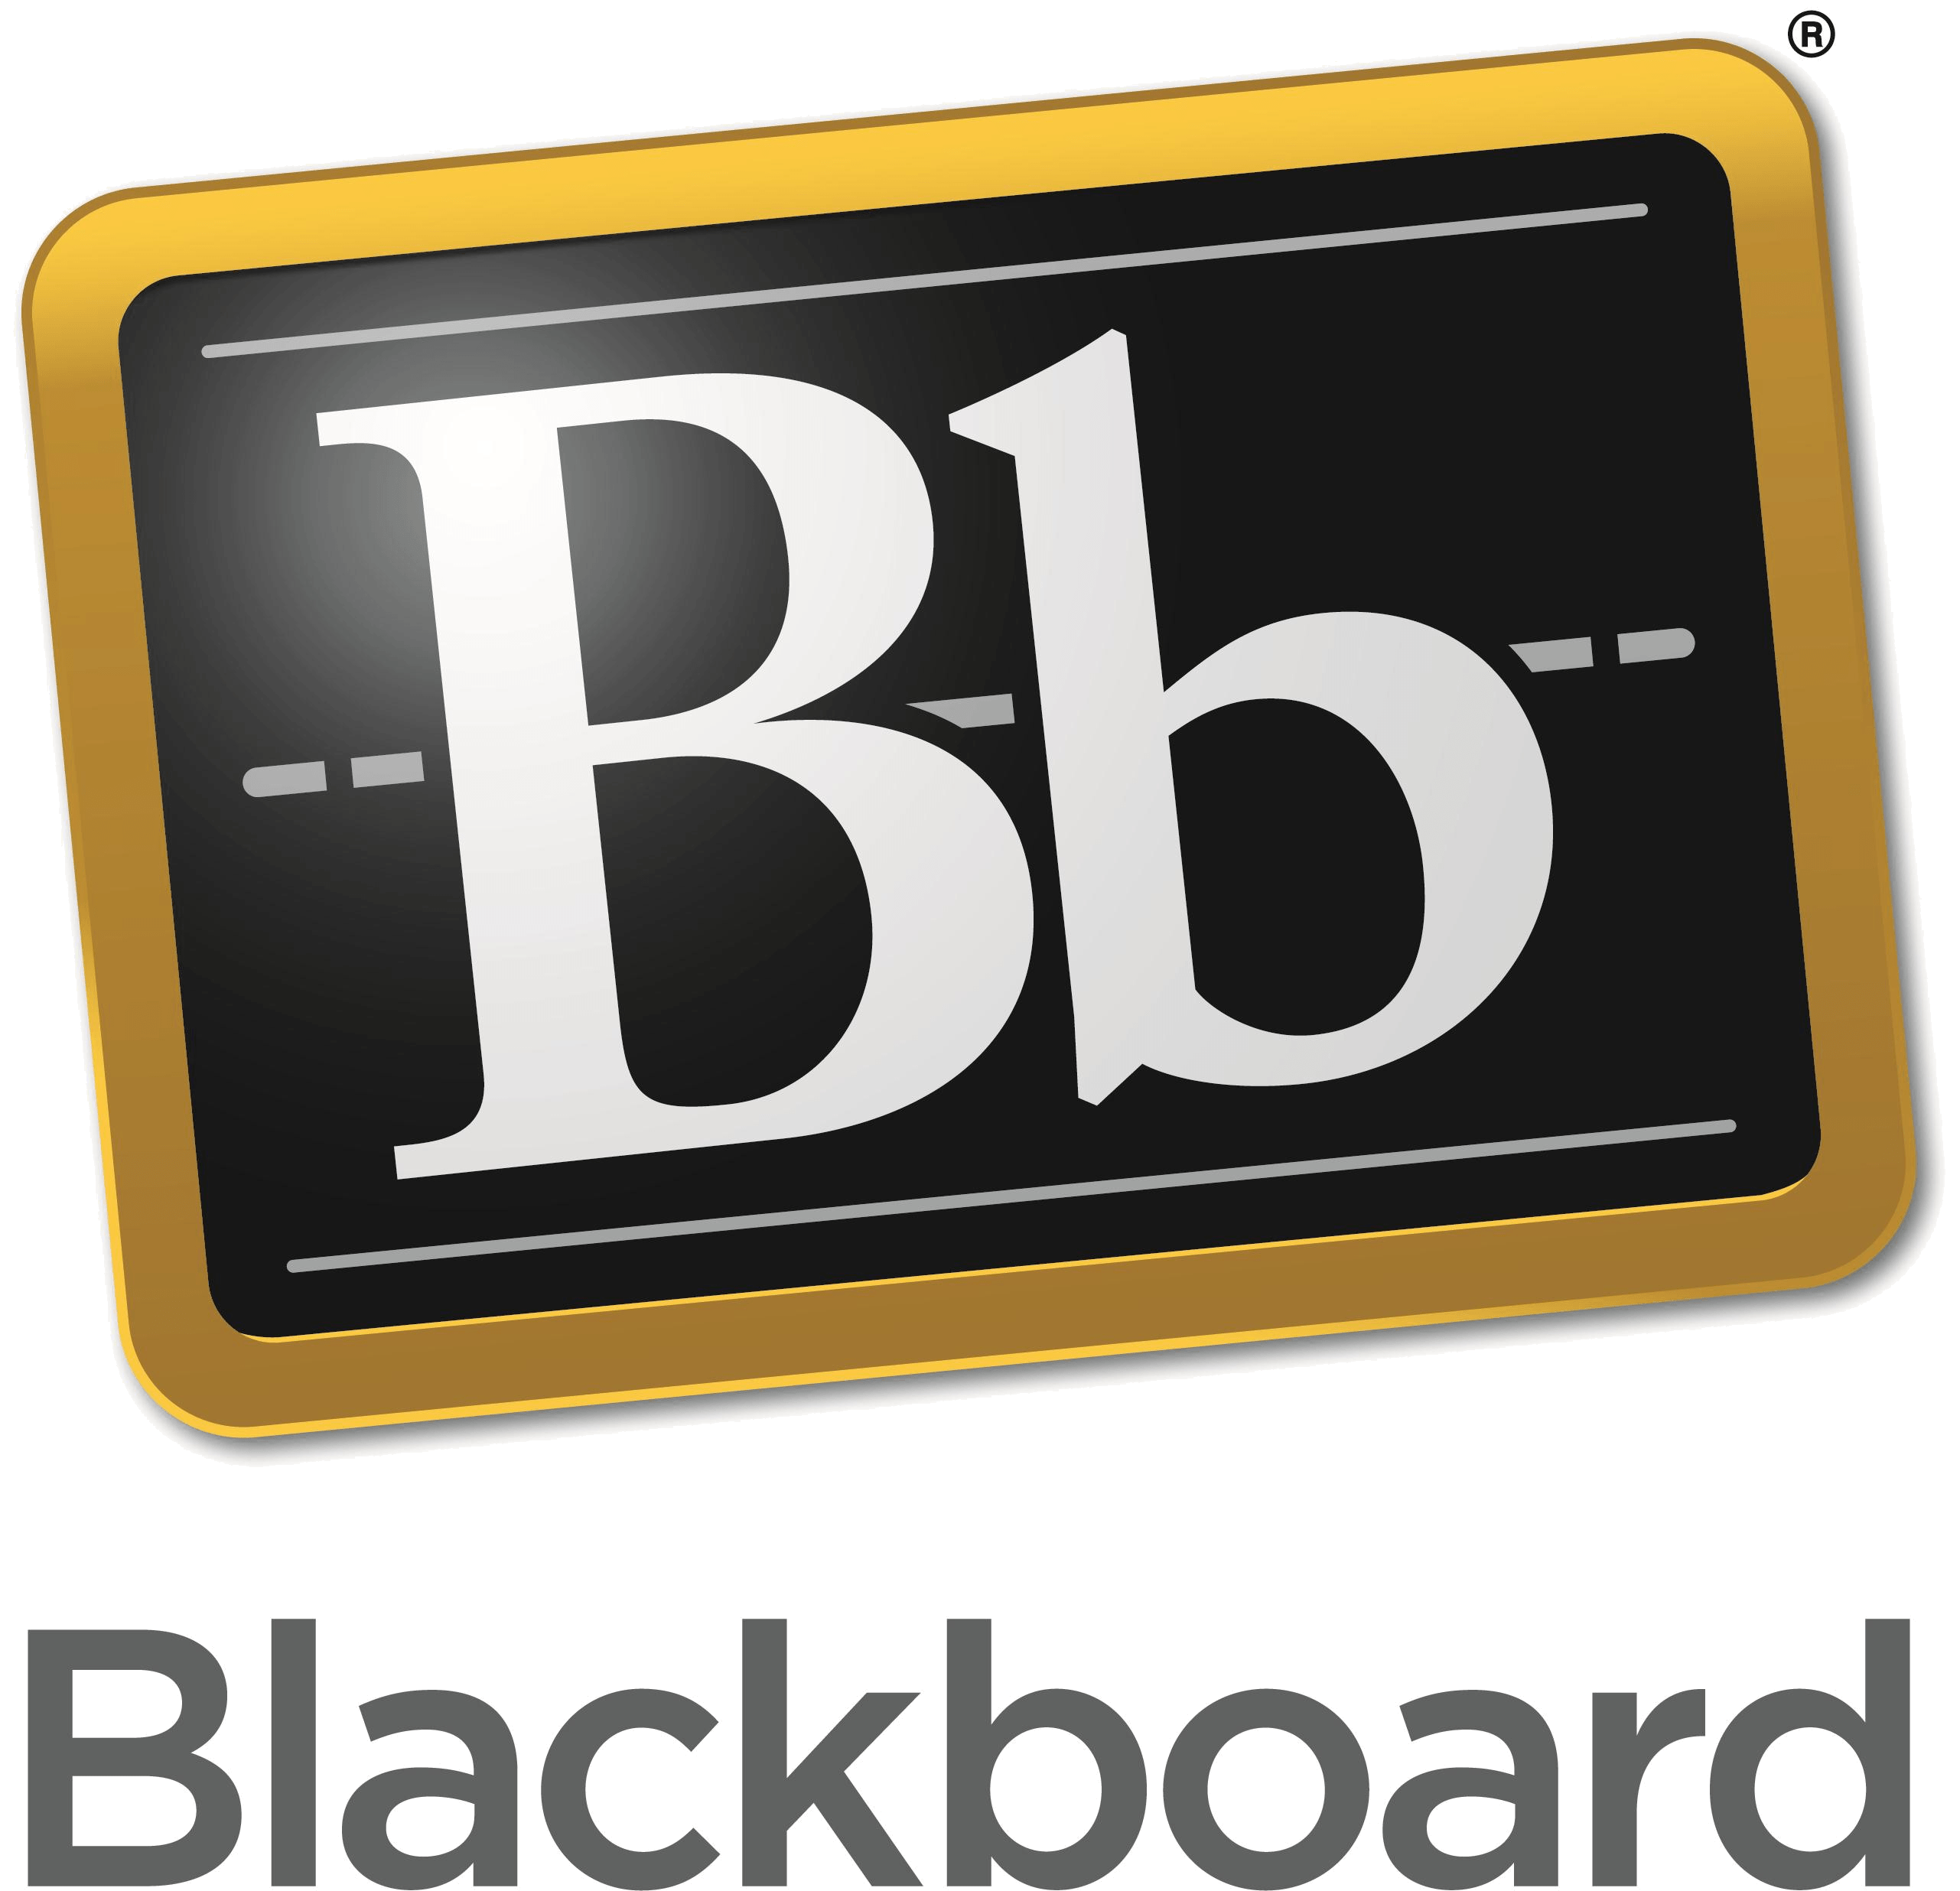 Blackboard Logo - Blackboard Inc.